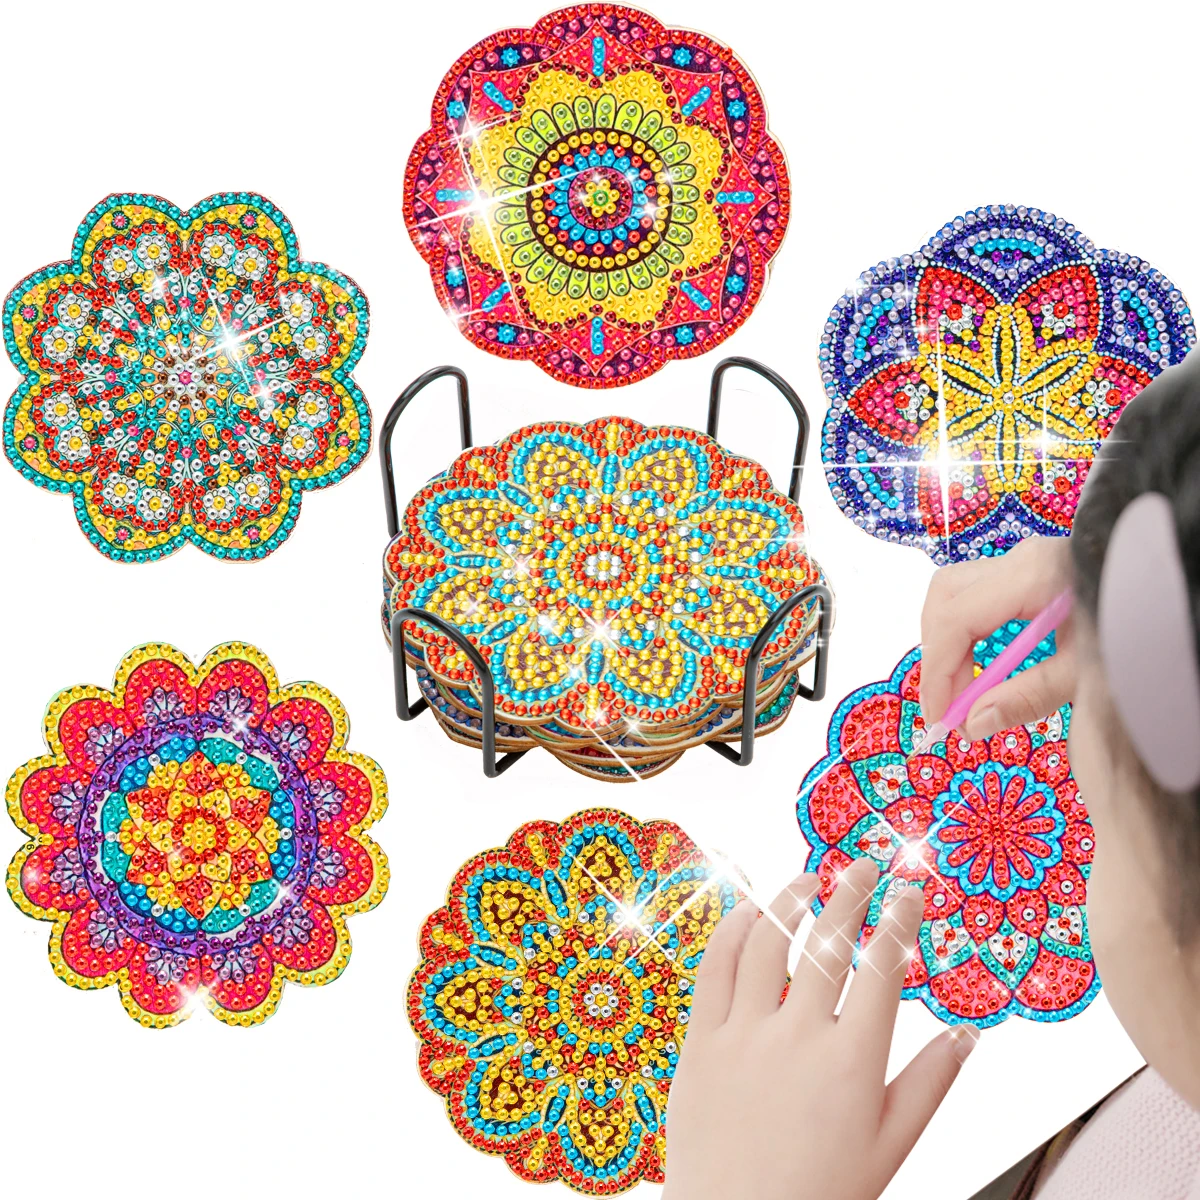 

SDOYUNO 6pc/sets Diamond Painting Coasters Kits with Holder Mandala Diamond Art Kits for Adults Kids Beginners Diamond Craft